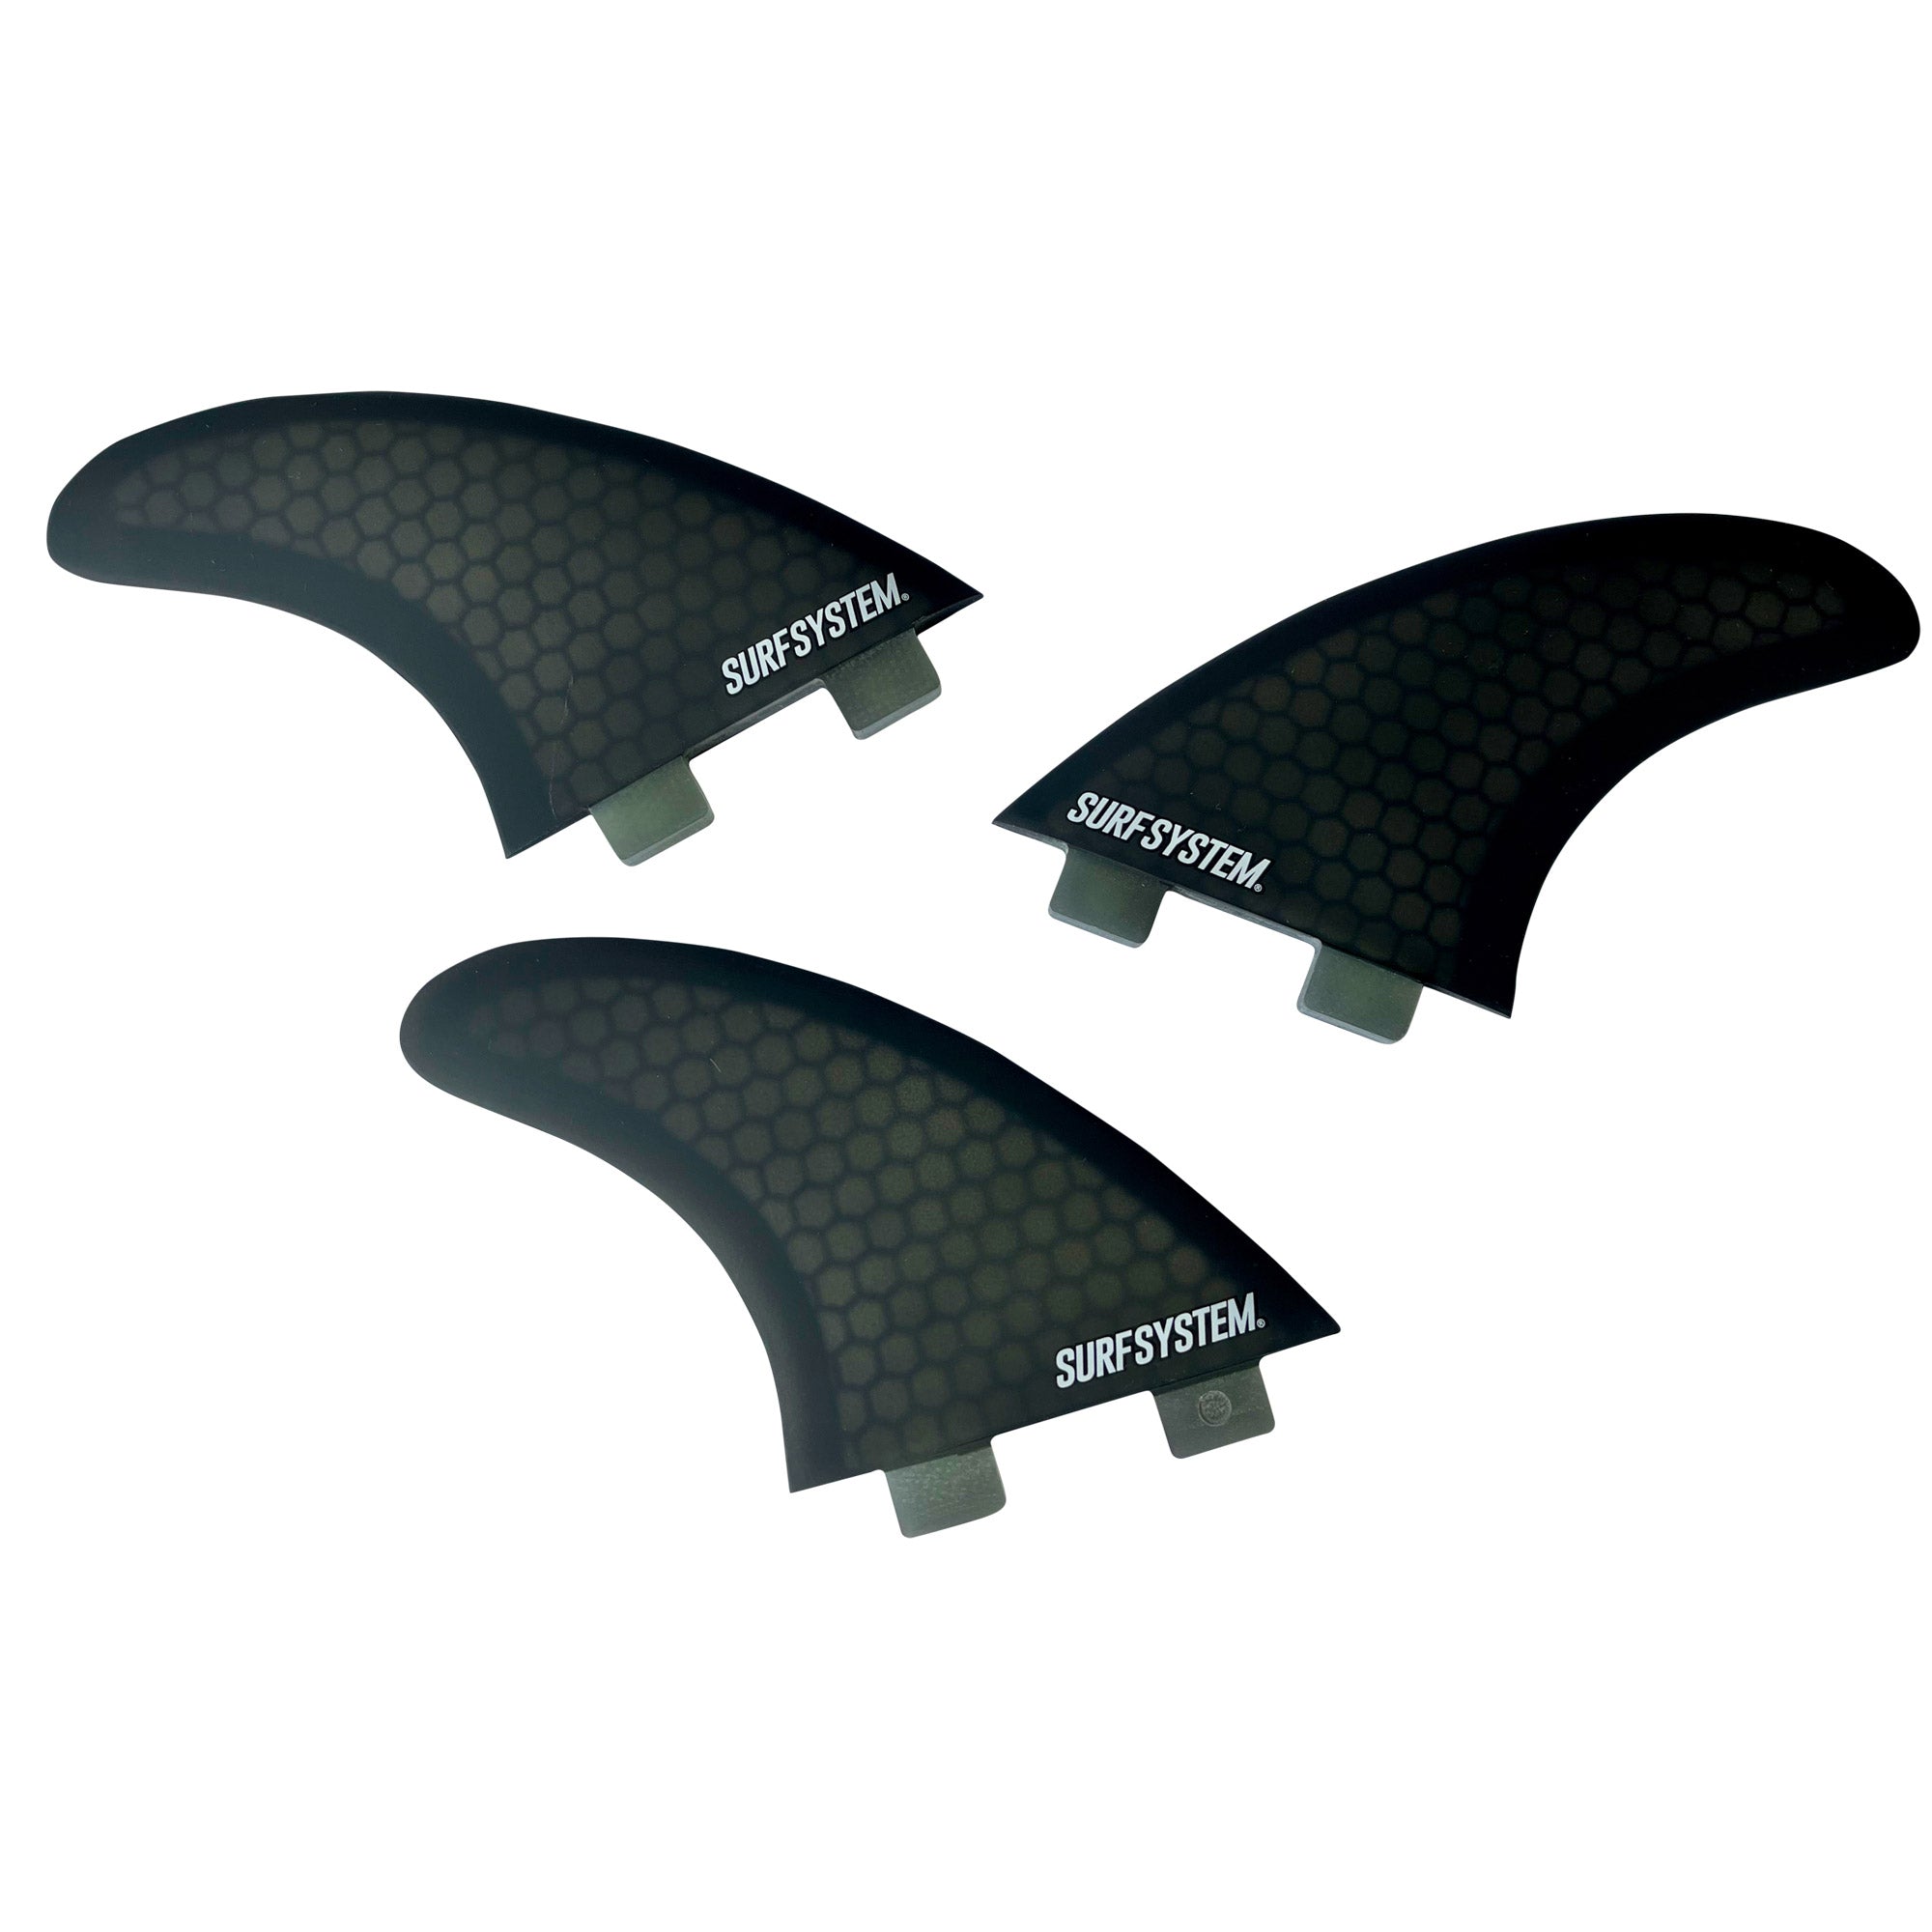 SURF SYSTEM - 3 Fiberglass Honeycomb fins FCS compatible - Size M - Smoke